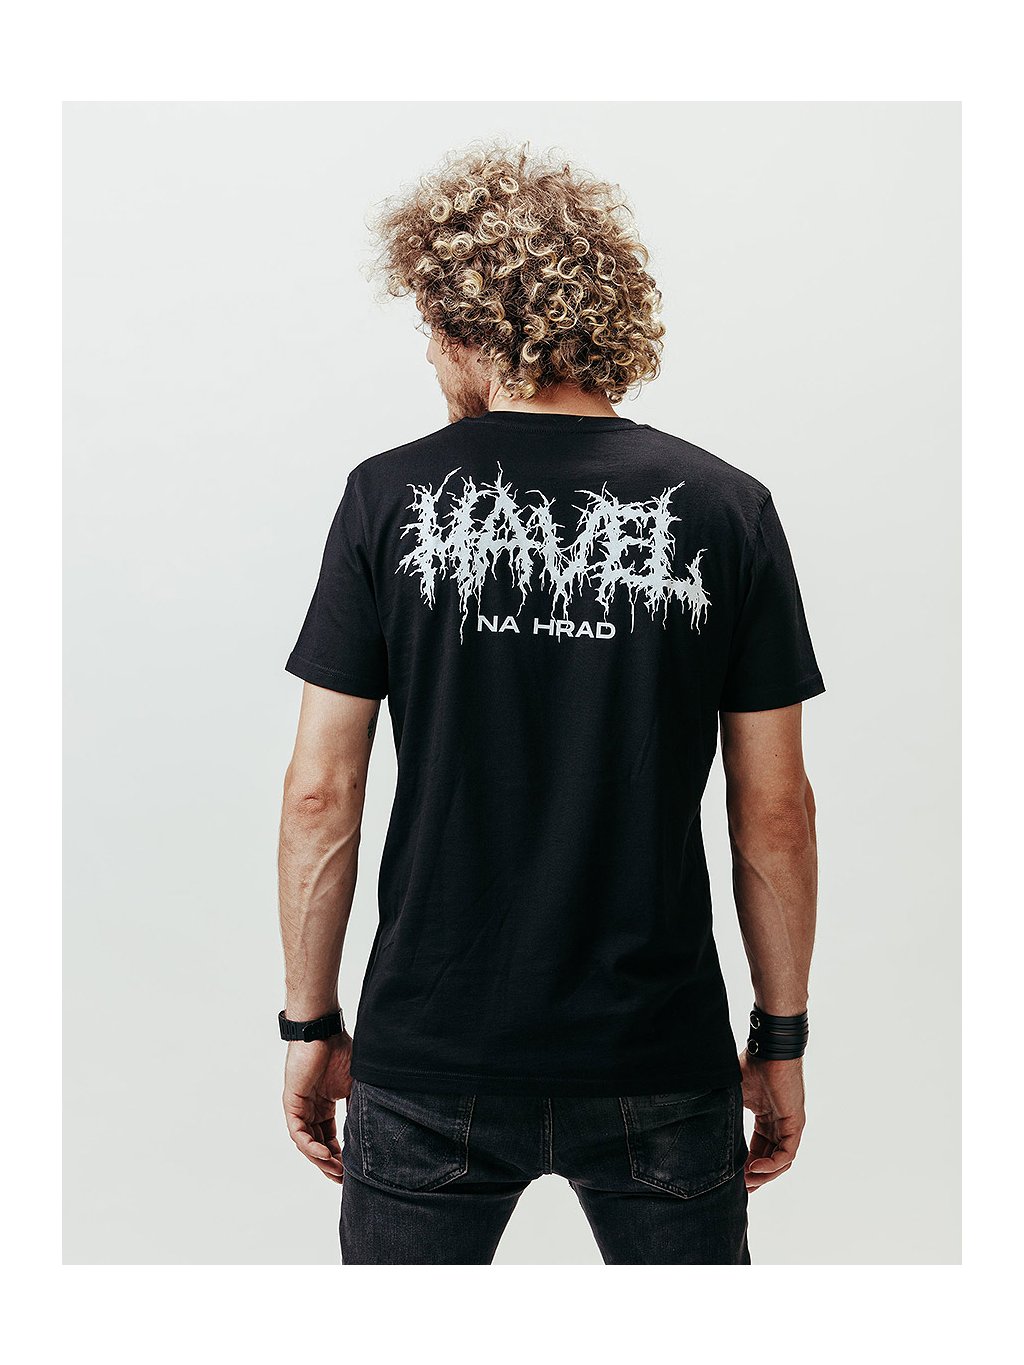 Havel na Hrad T-Shirt - Never Enough Ltd. Enough Ltd. - Streetwear